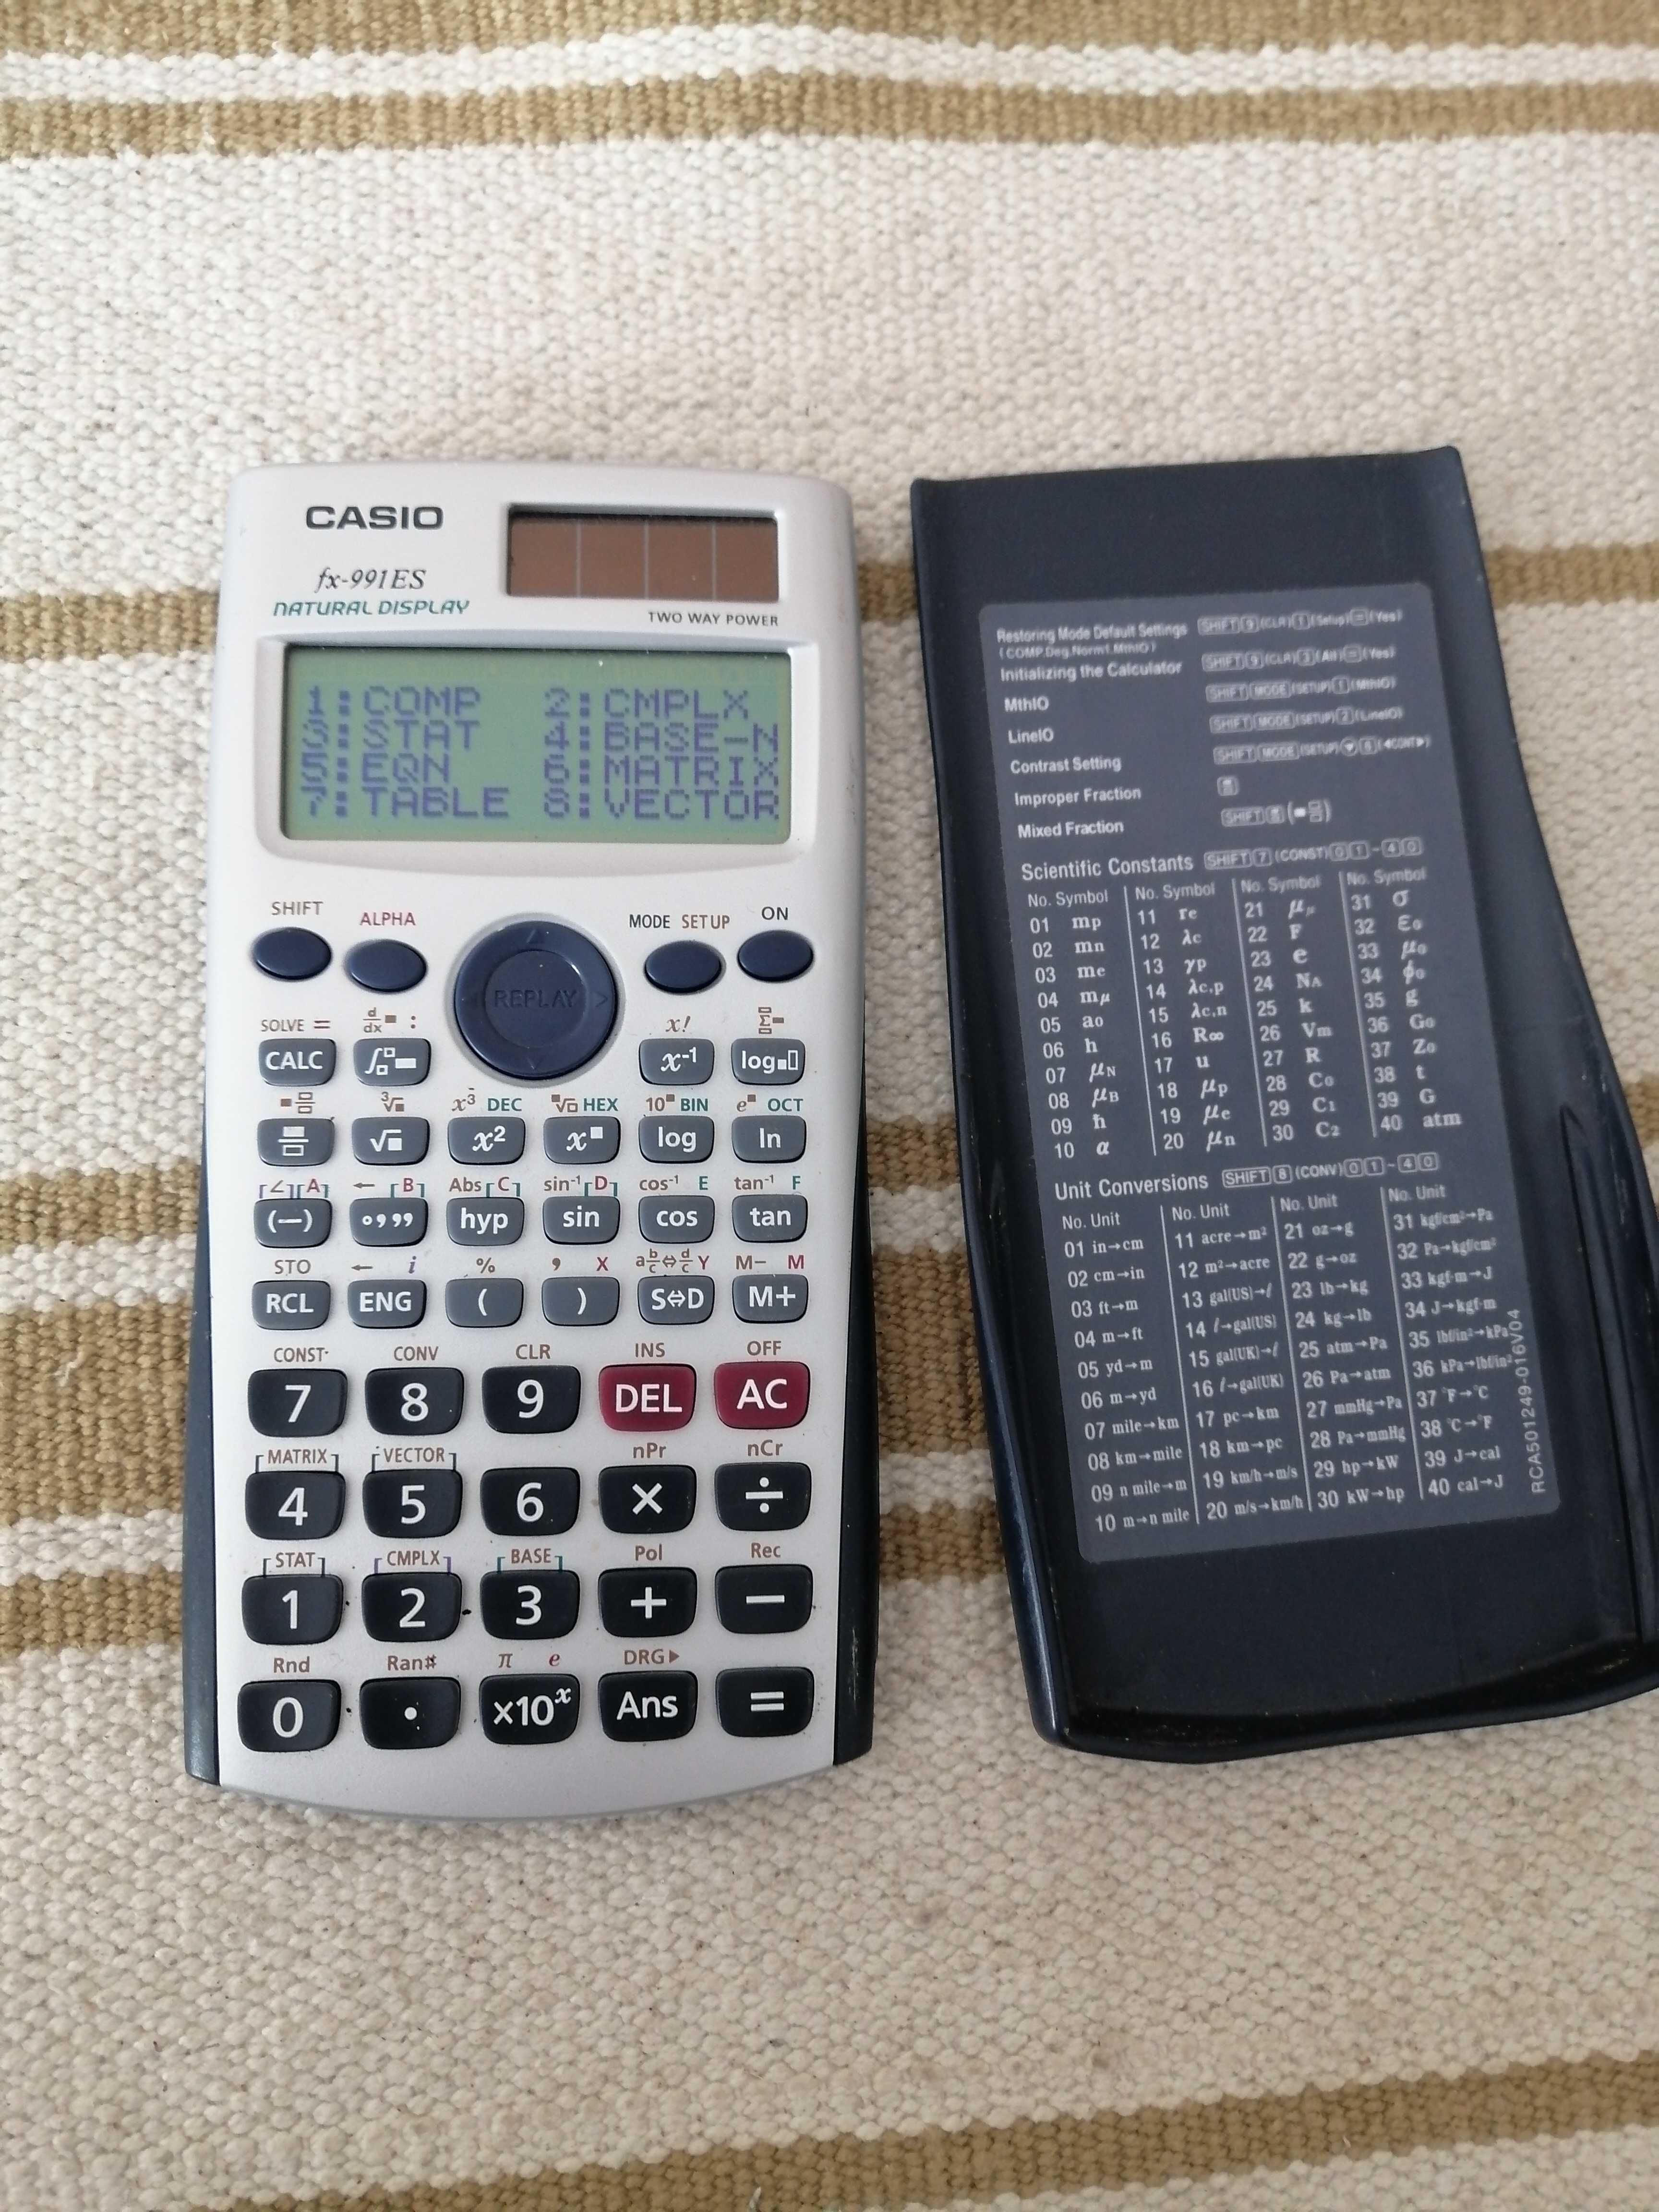 kalkulator CASIO FX-991ES natural display